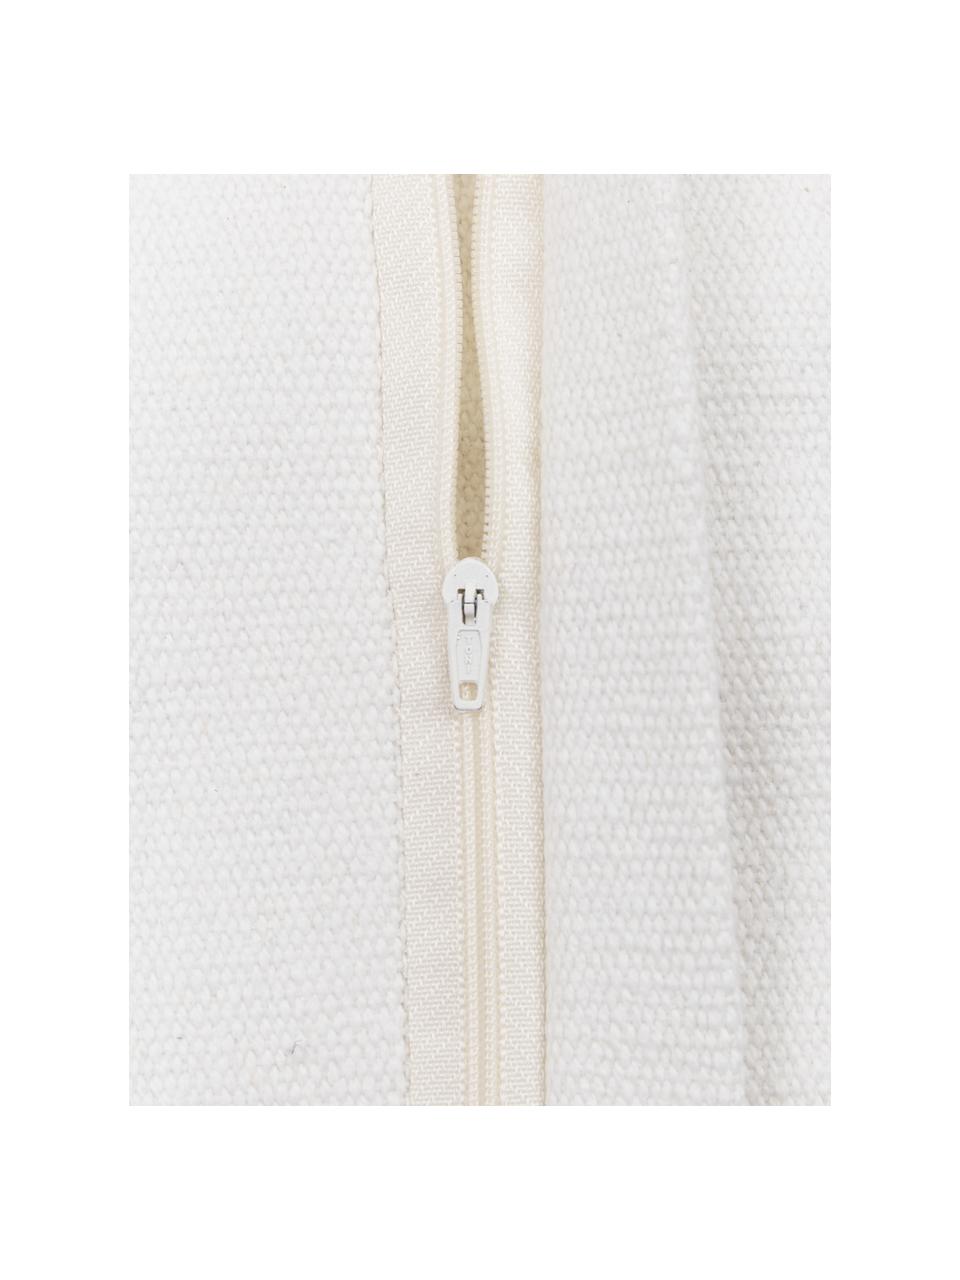 Cojín texturizado Sudda, con relleno, Funda: 100% algodón, Blanco, An 30 x L 50 cm